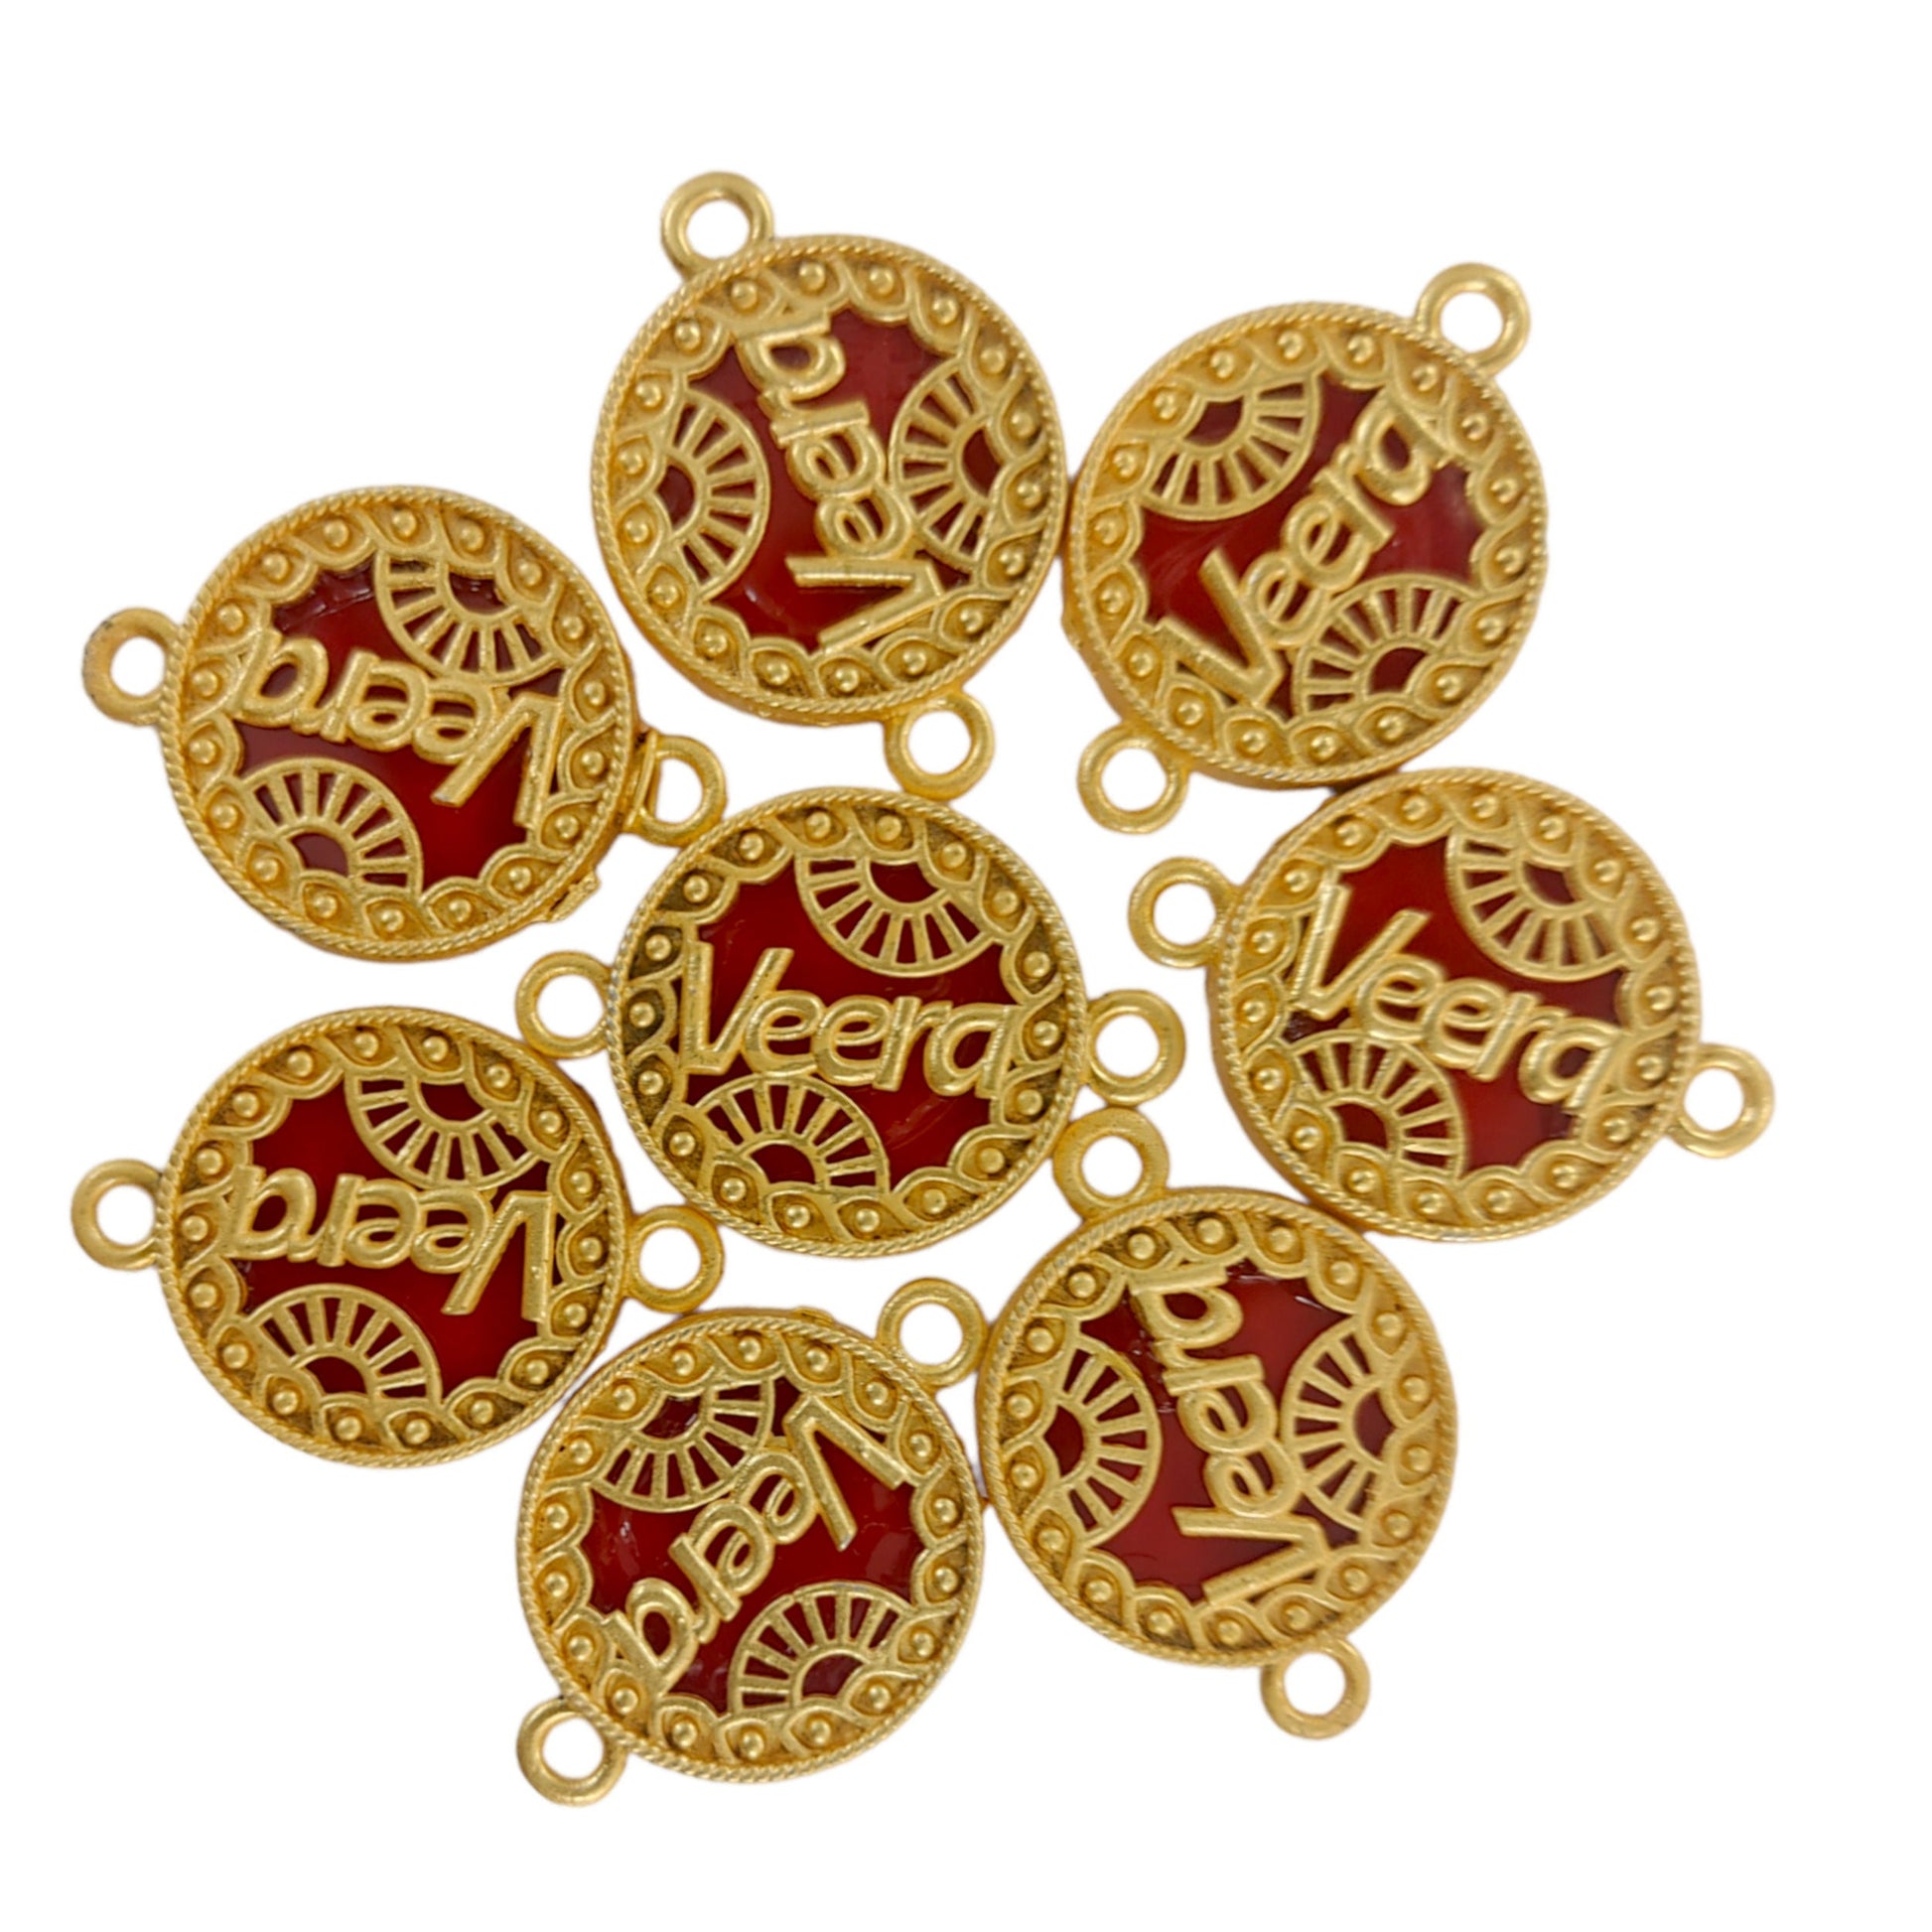 Indian Petals Veera Shape Metal Die Cast Rakhi Pendant Motif for Rakhi, Jewelry designing and Craft Making or Decor